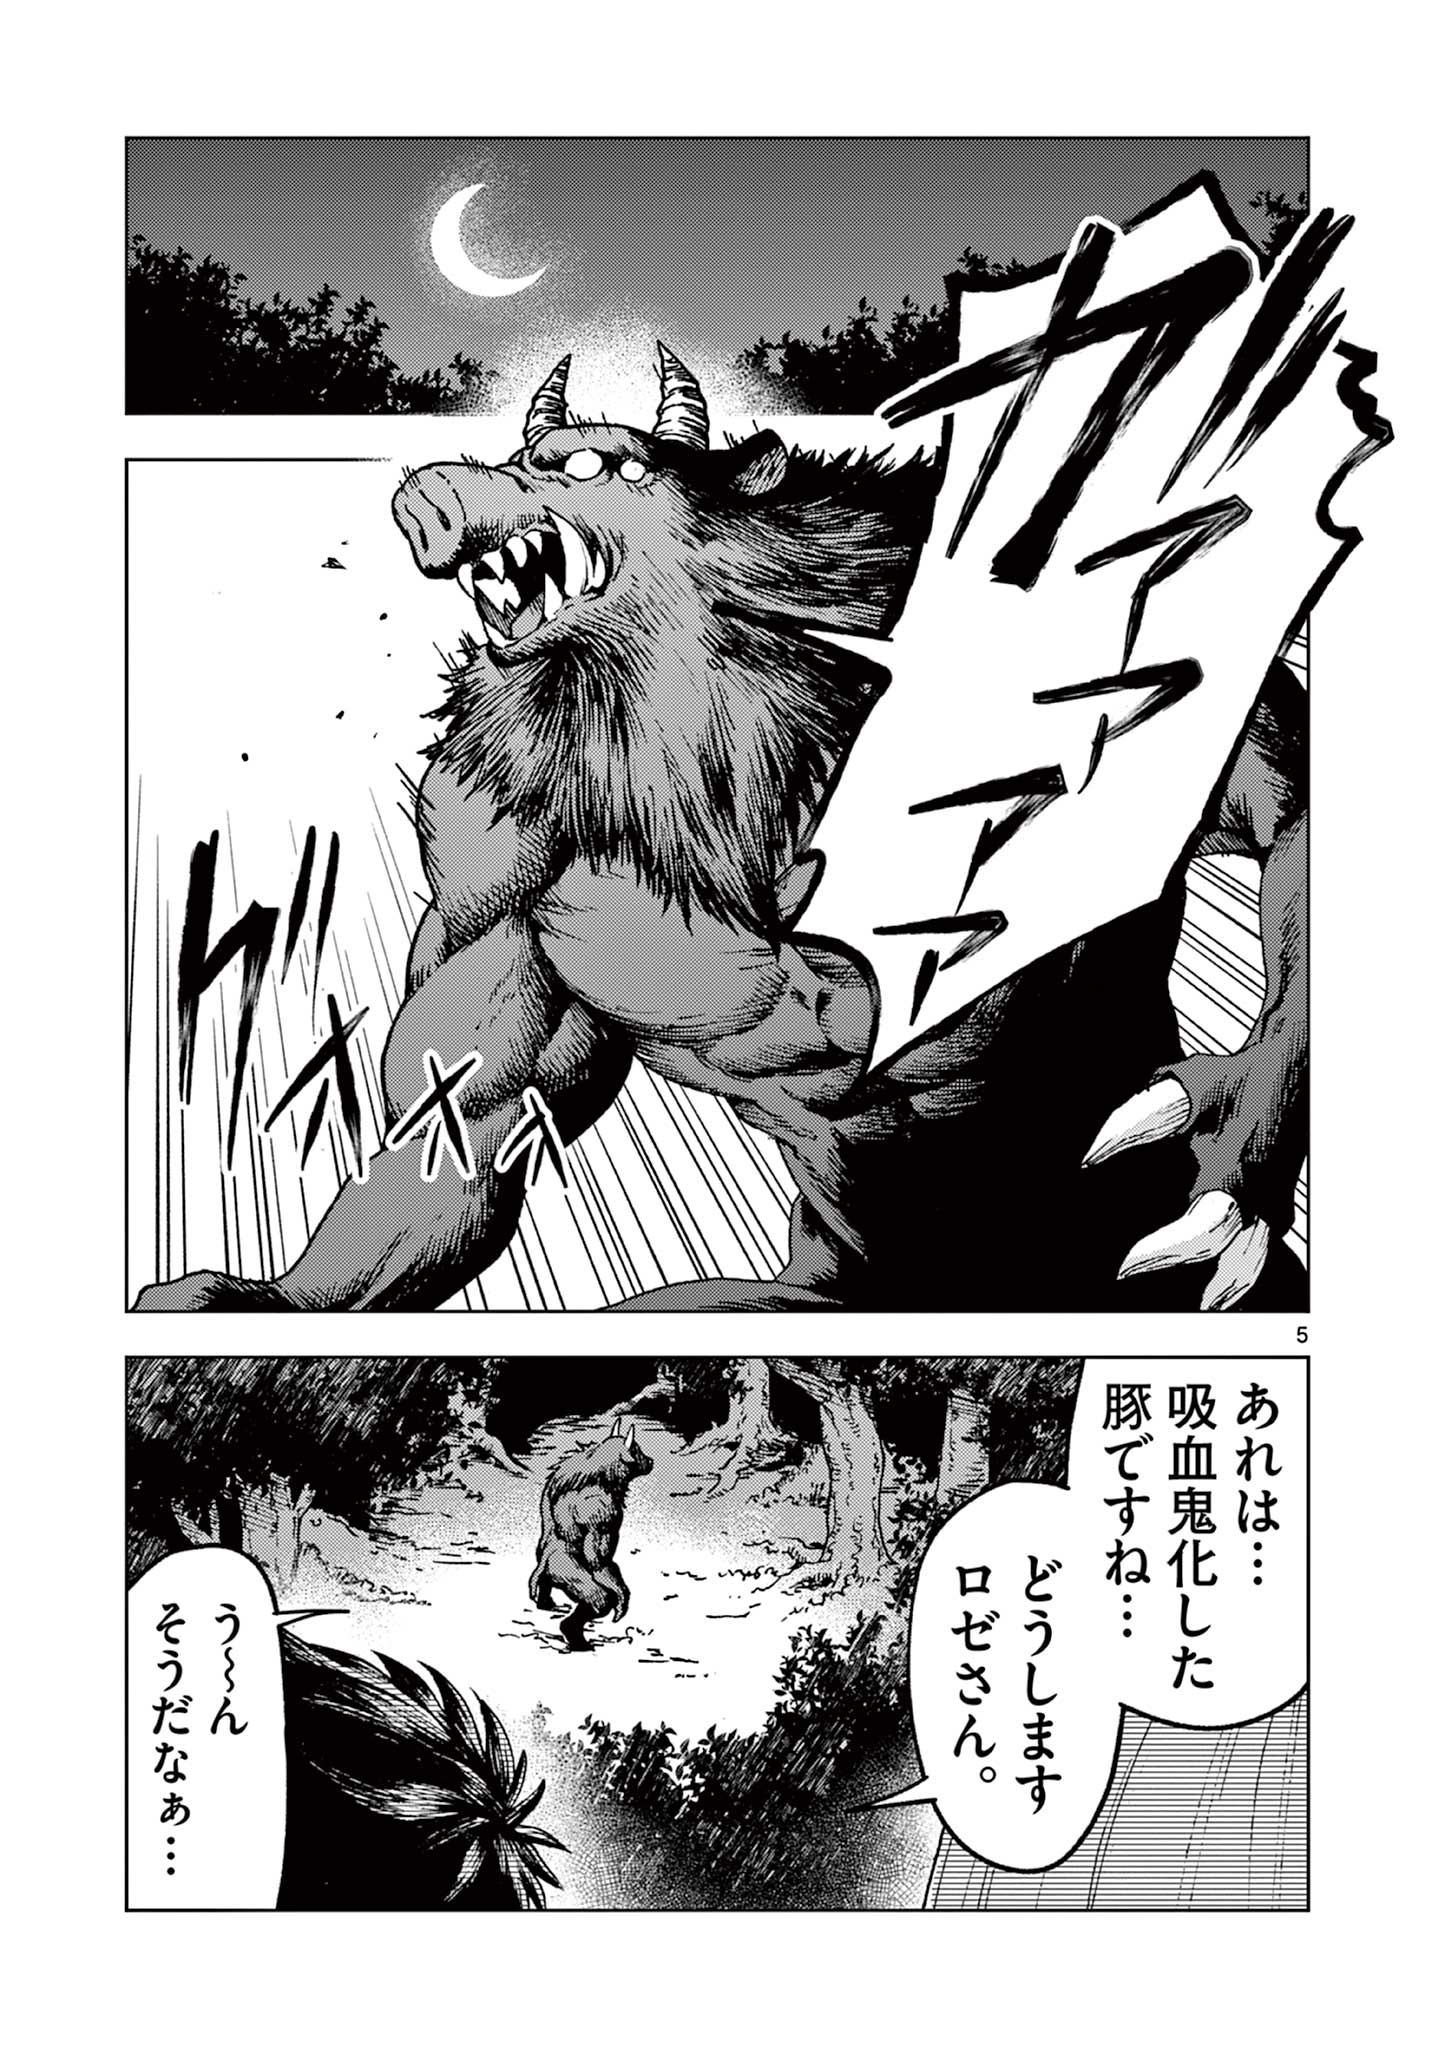 Raul to Kyuuketsuki - Chapter 1 - Page 5